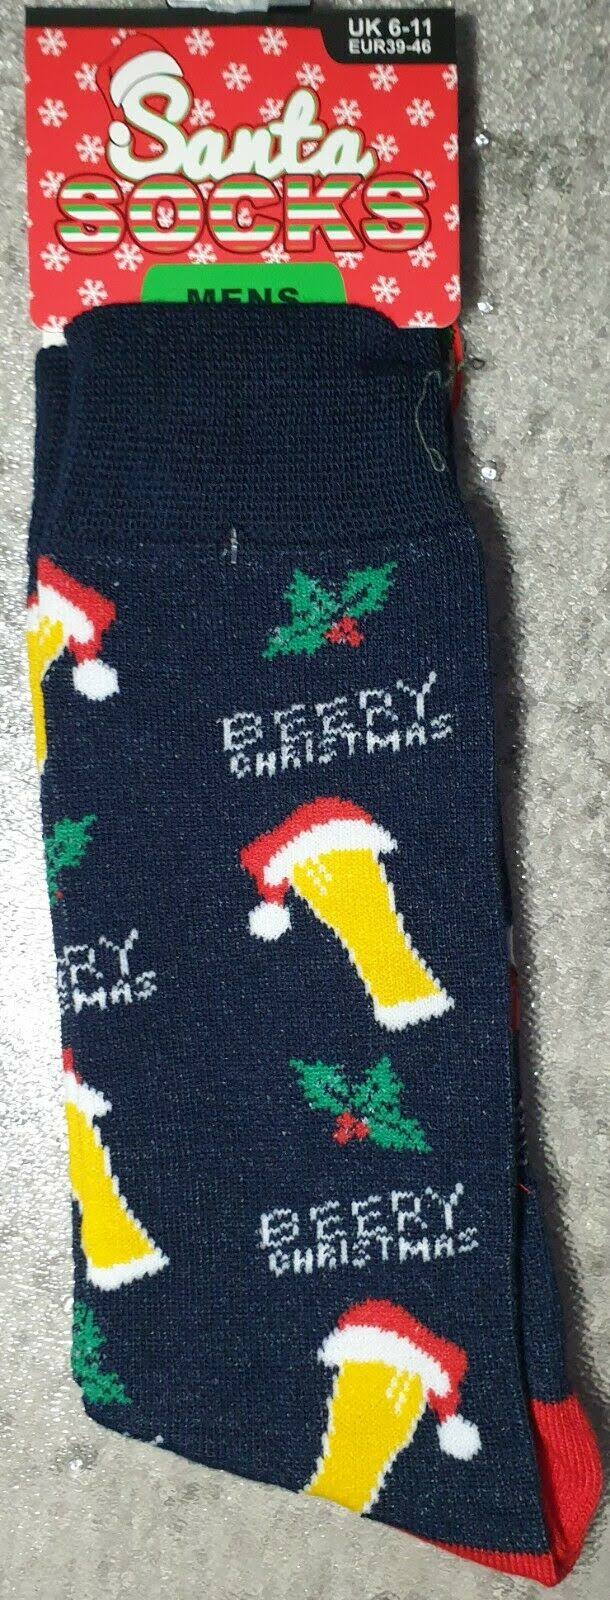 Christmas Santa Socks Novelty Funny Gift Men Size 6-11 (Four Styles) Stocking